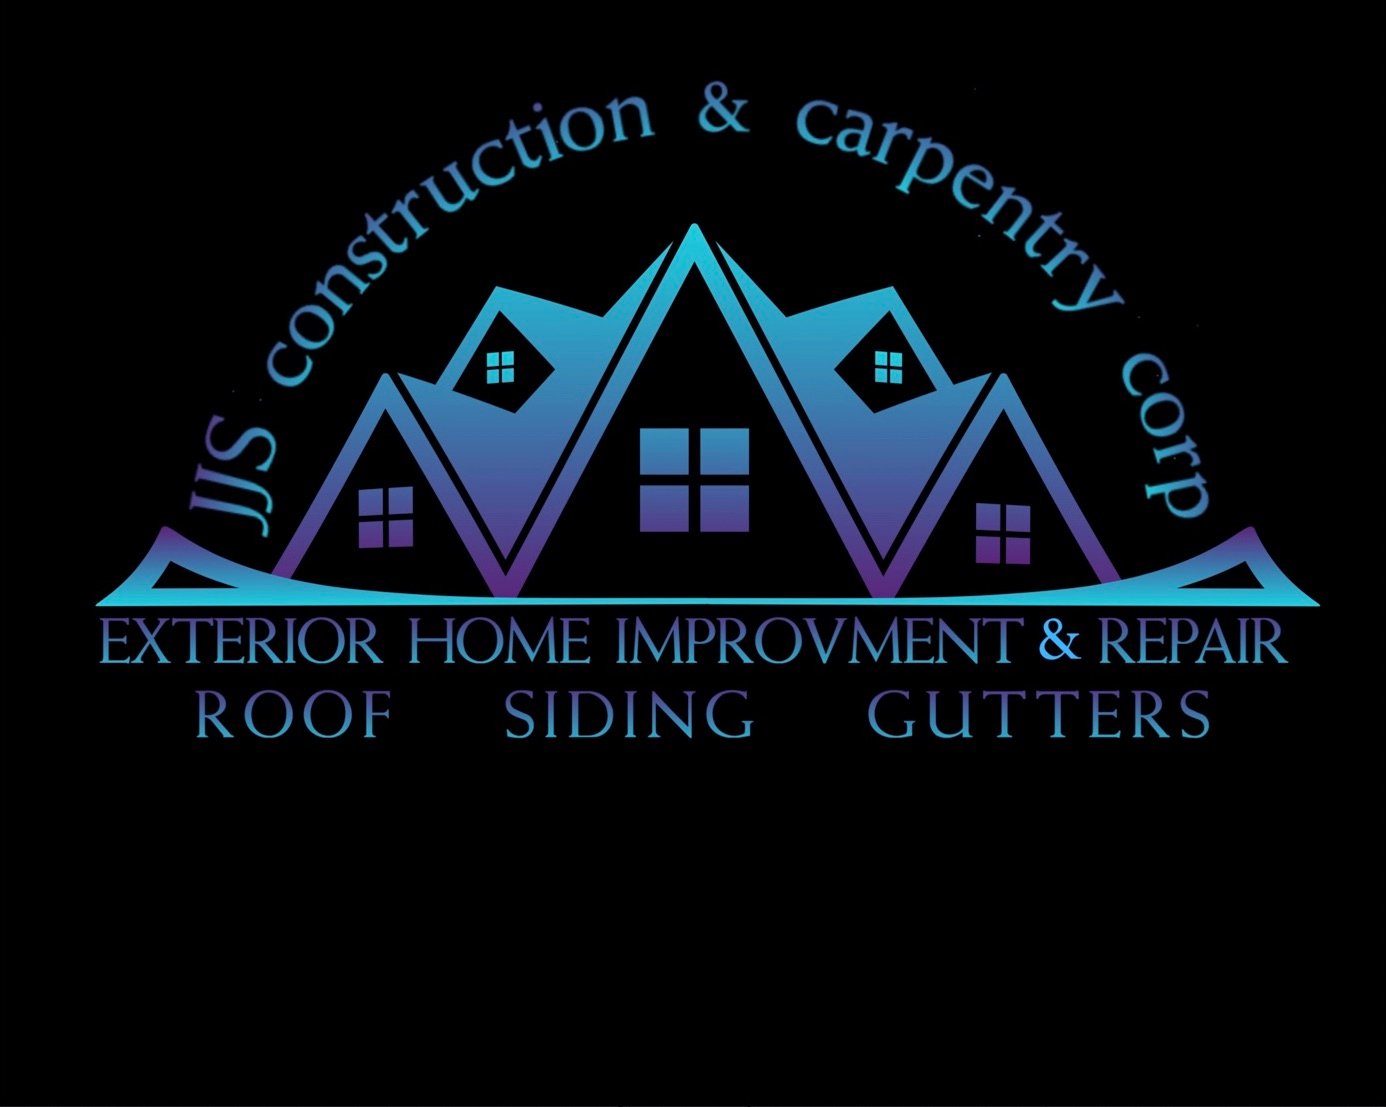 JJS Construction & Carpentry Corp Logo